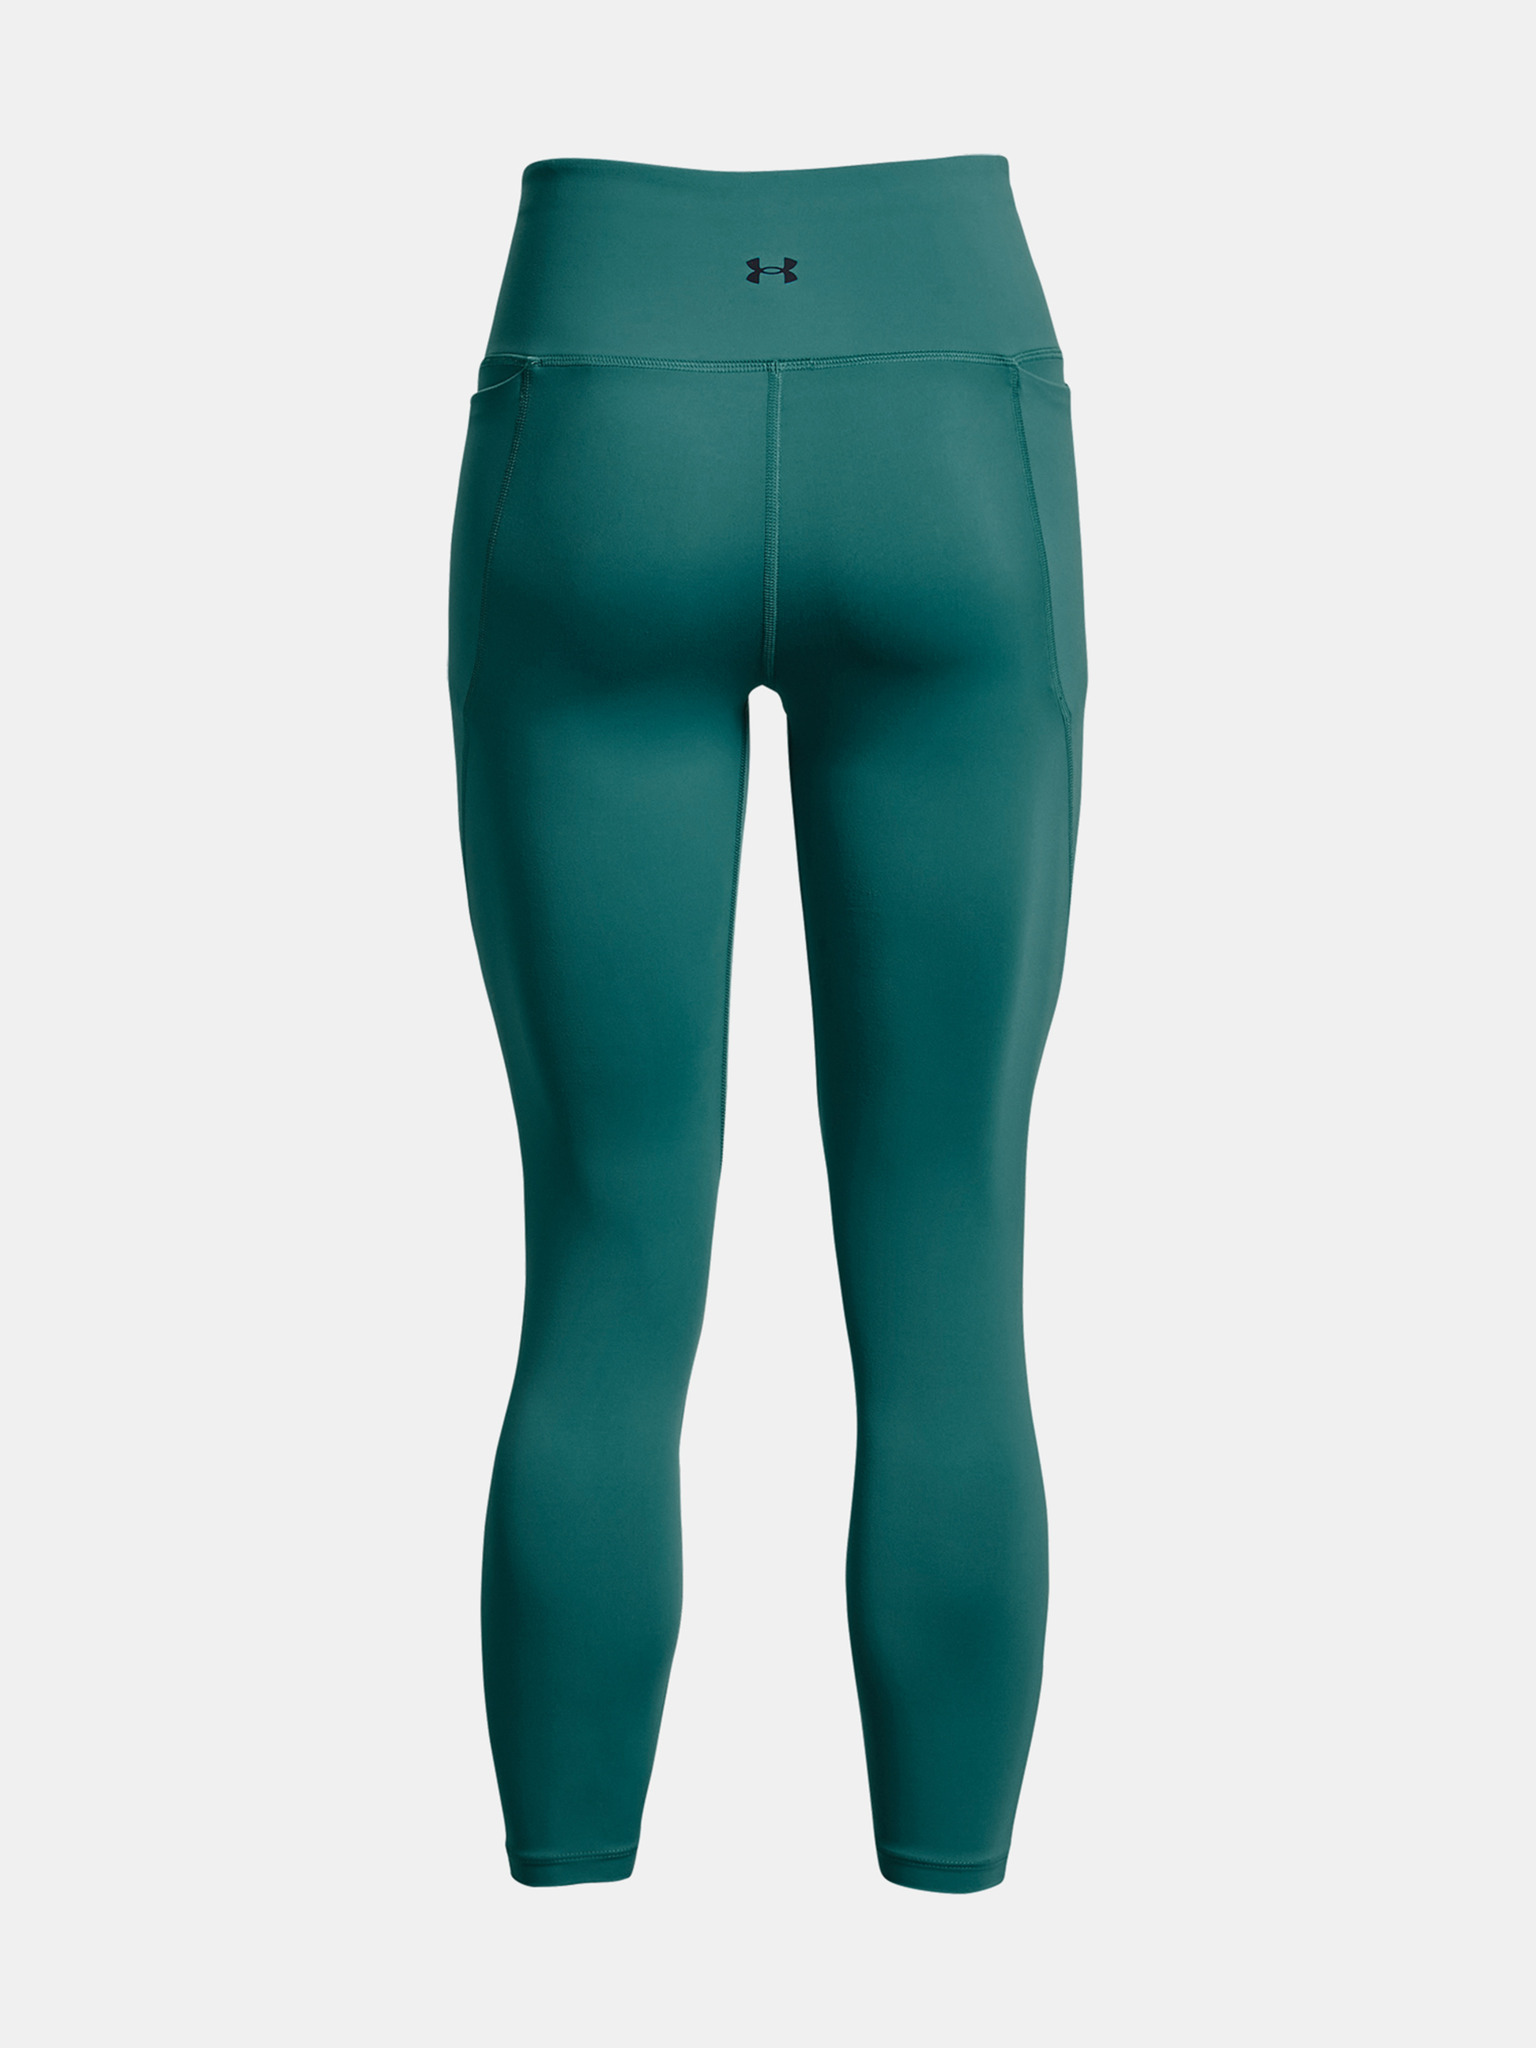 Under Armour Womens Leggings Blue/Green XL : : Fashion